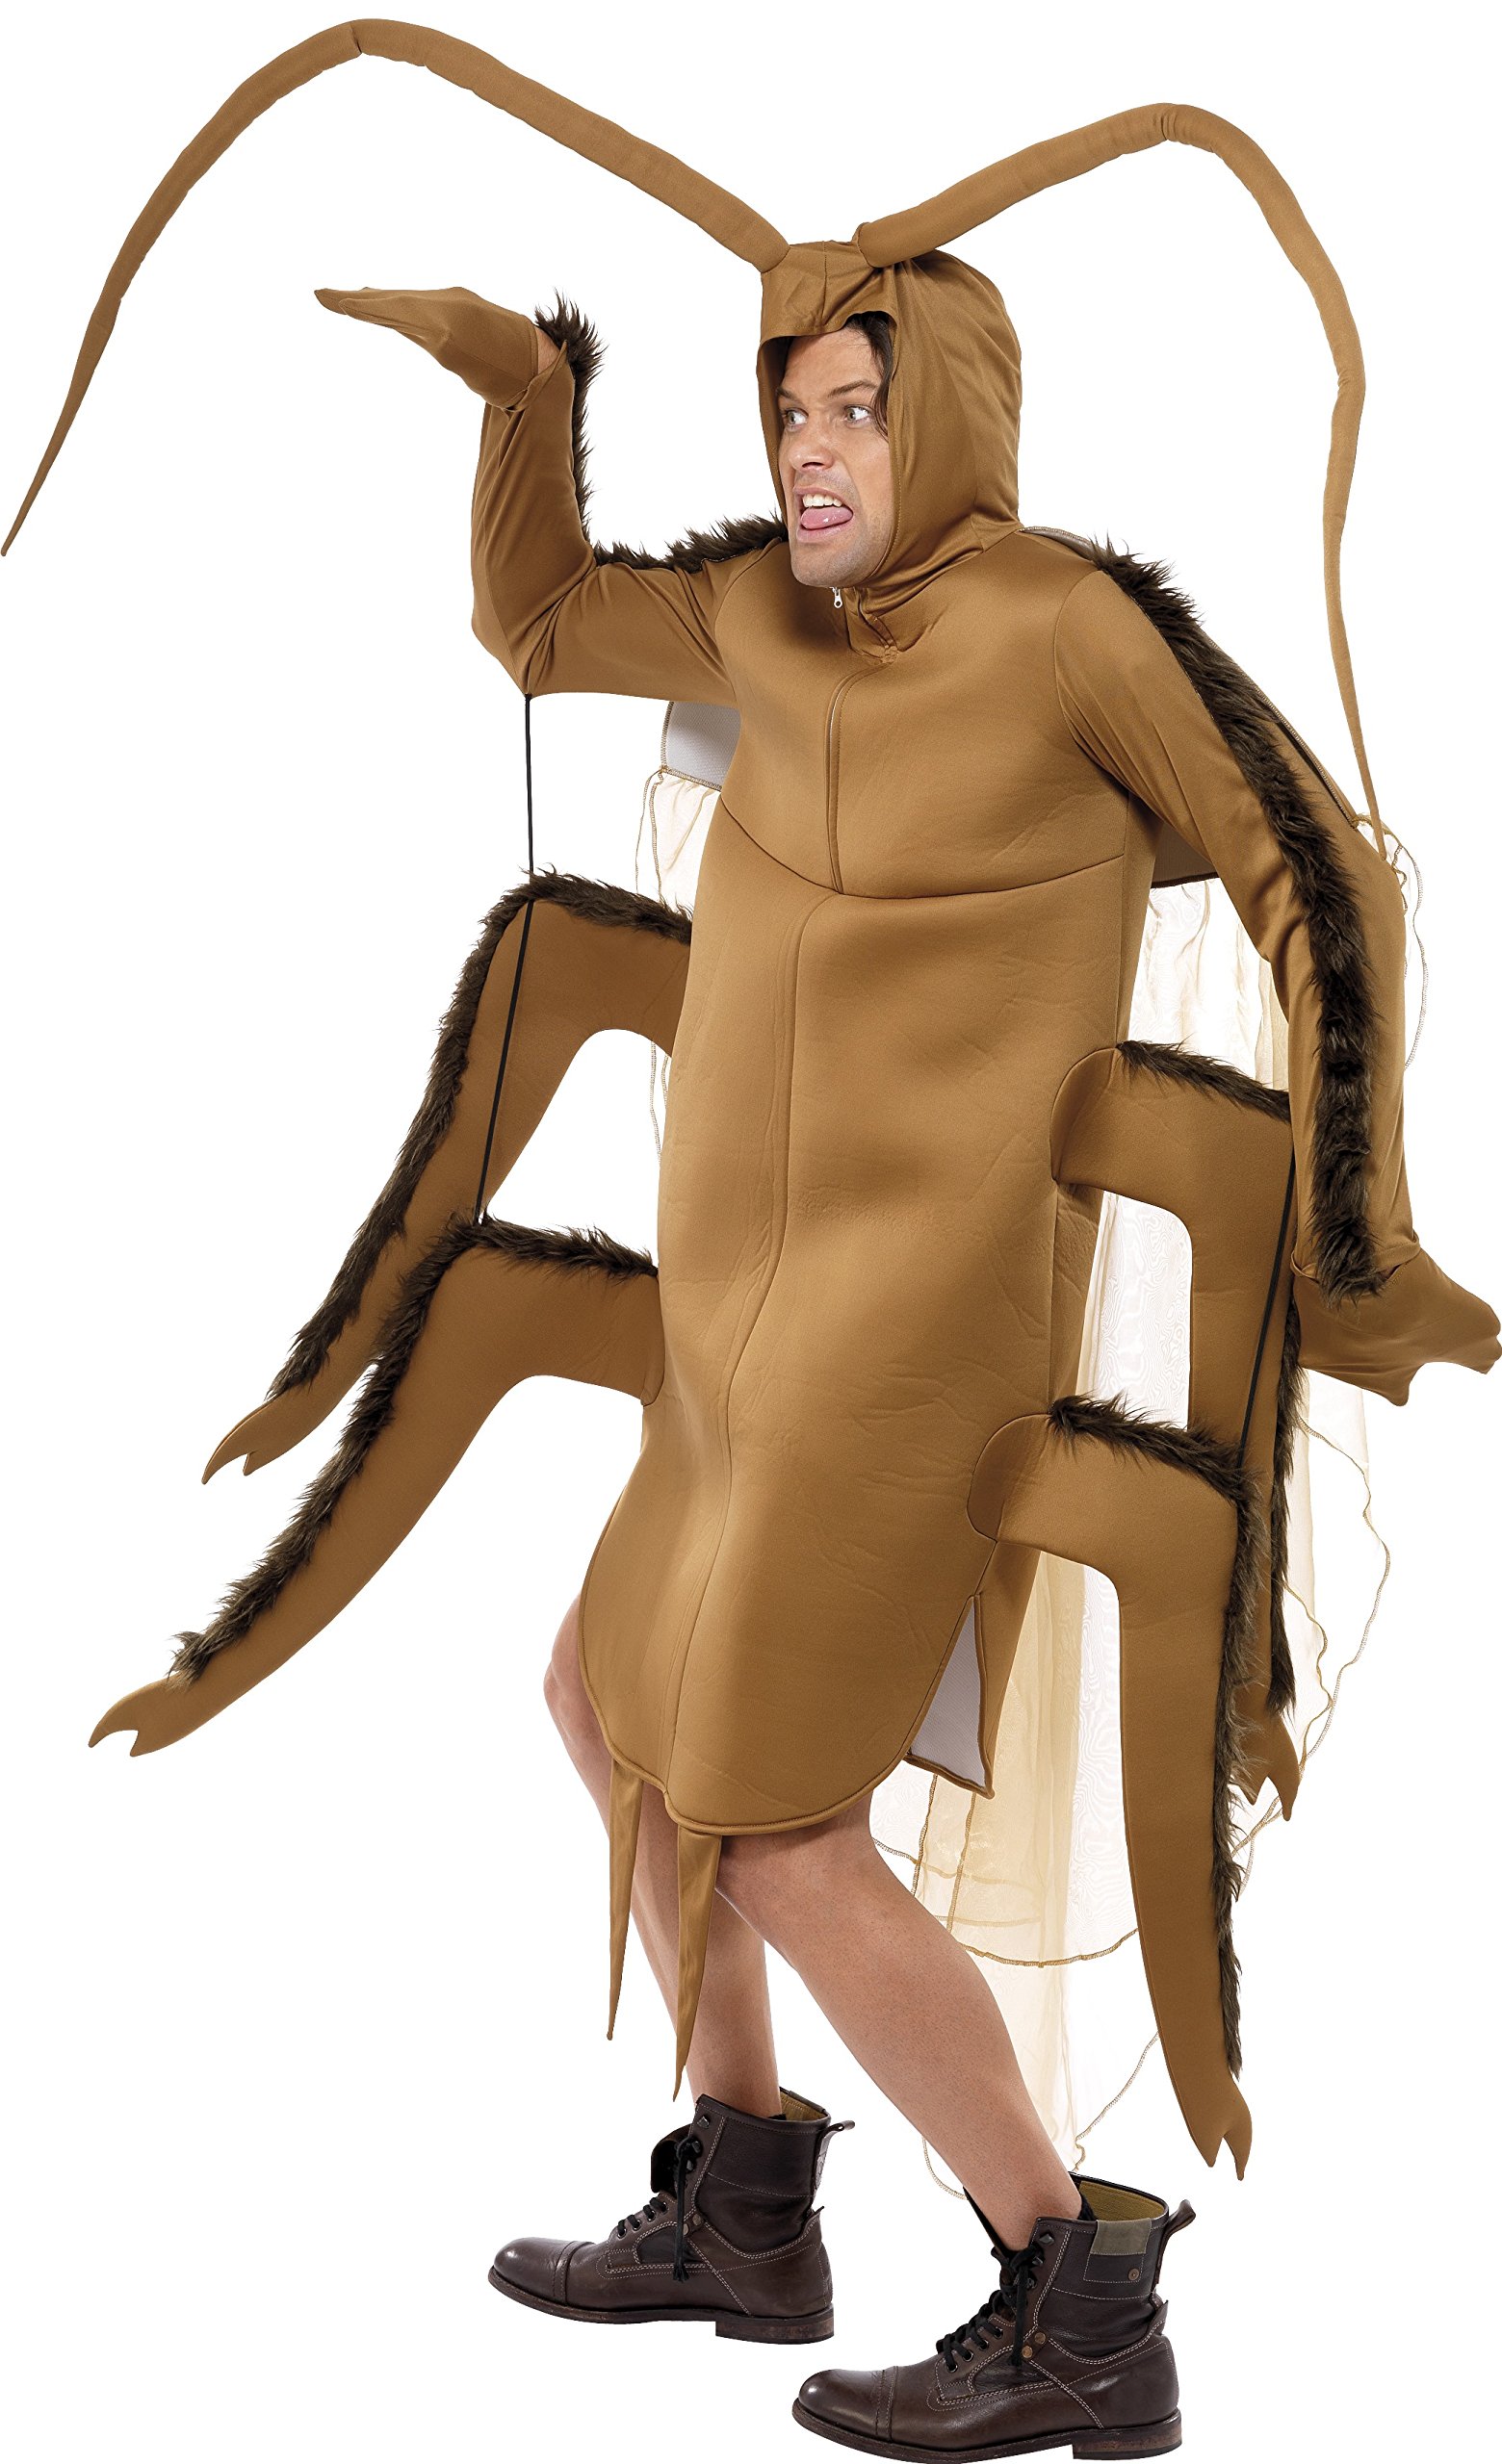 Smiffy's Men's Cockroach Costume Bodysuit with Sleeves